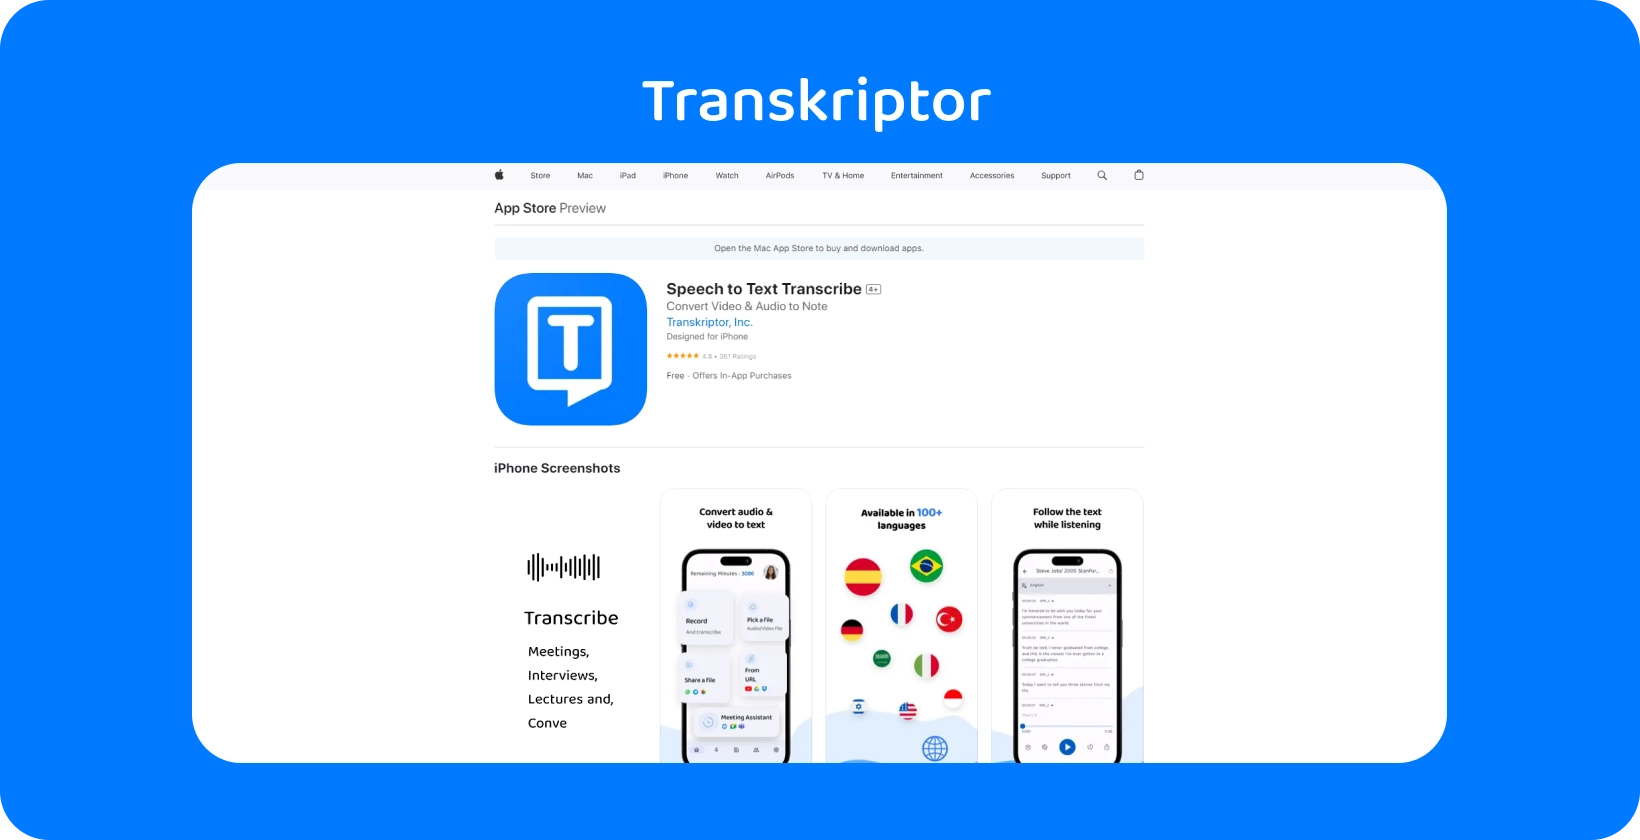 Aplikasi Transkriptor dipamerkan di iPhone, menyoroti kemampuan transkripsi ucapan-ke-teksnya.